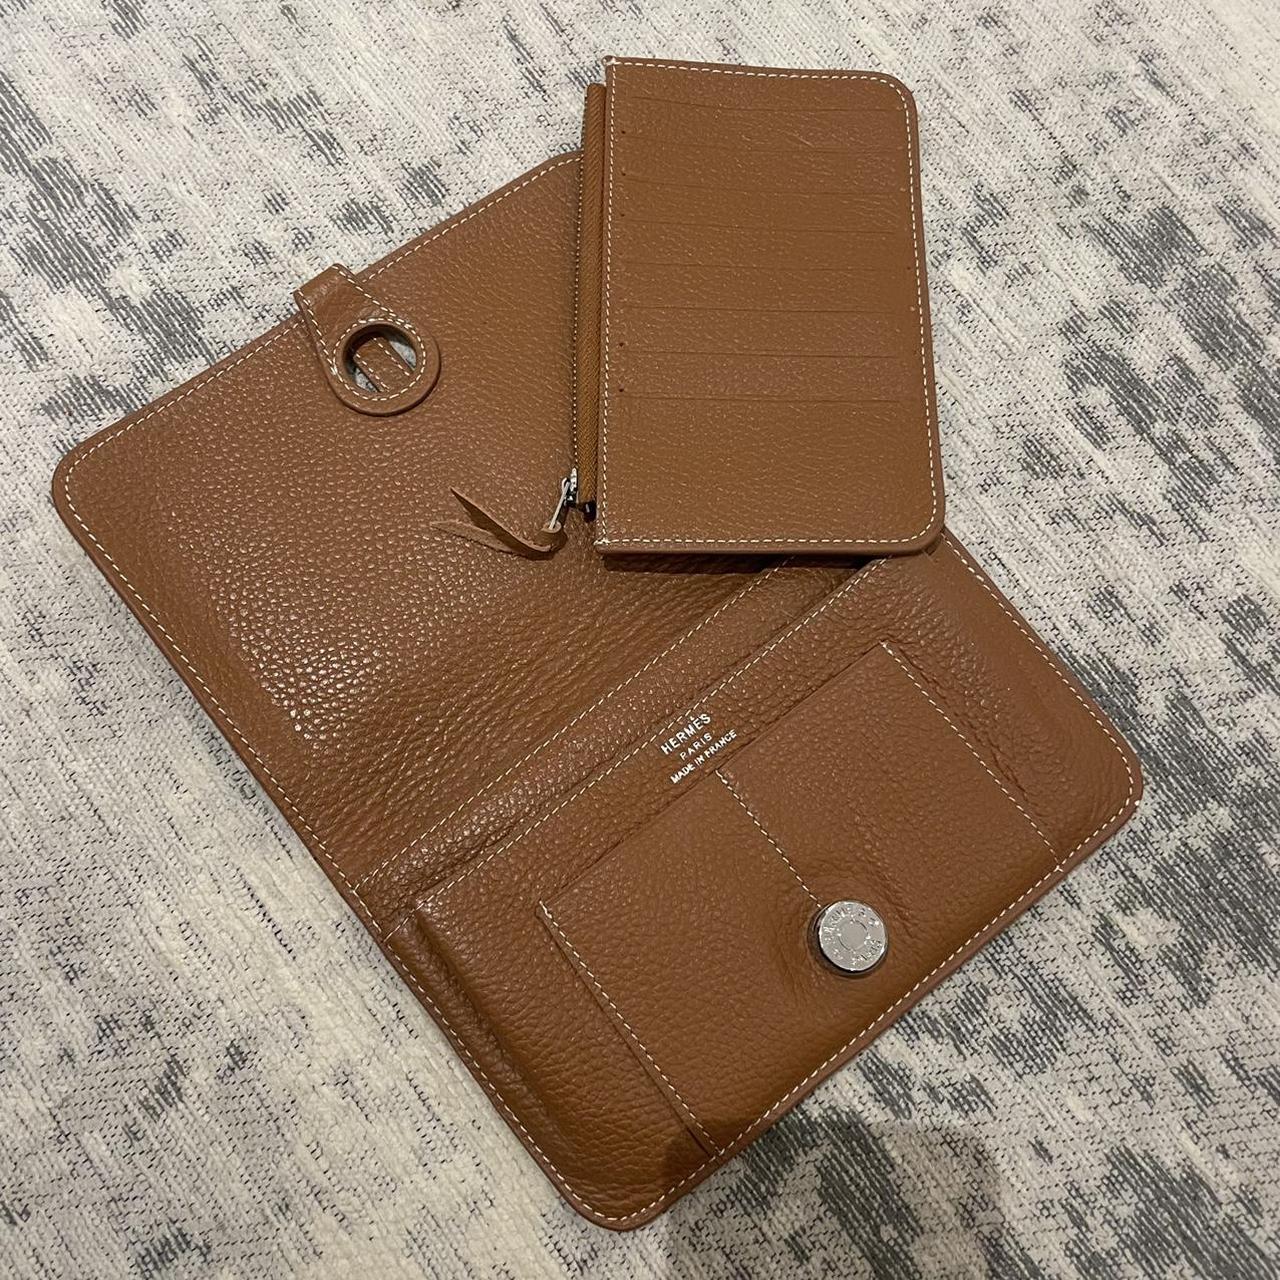 Hermes brown leather purse and card holder - Depop